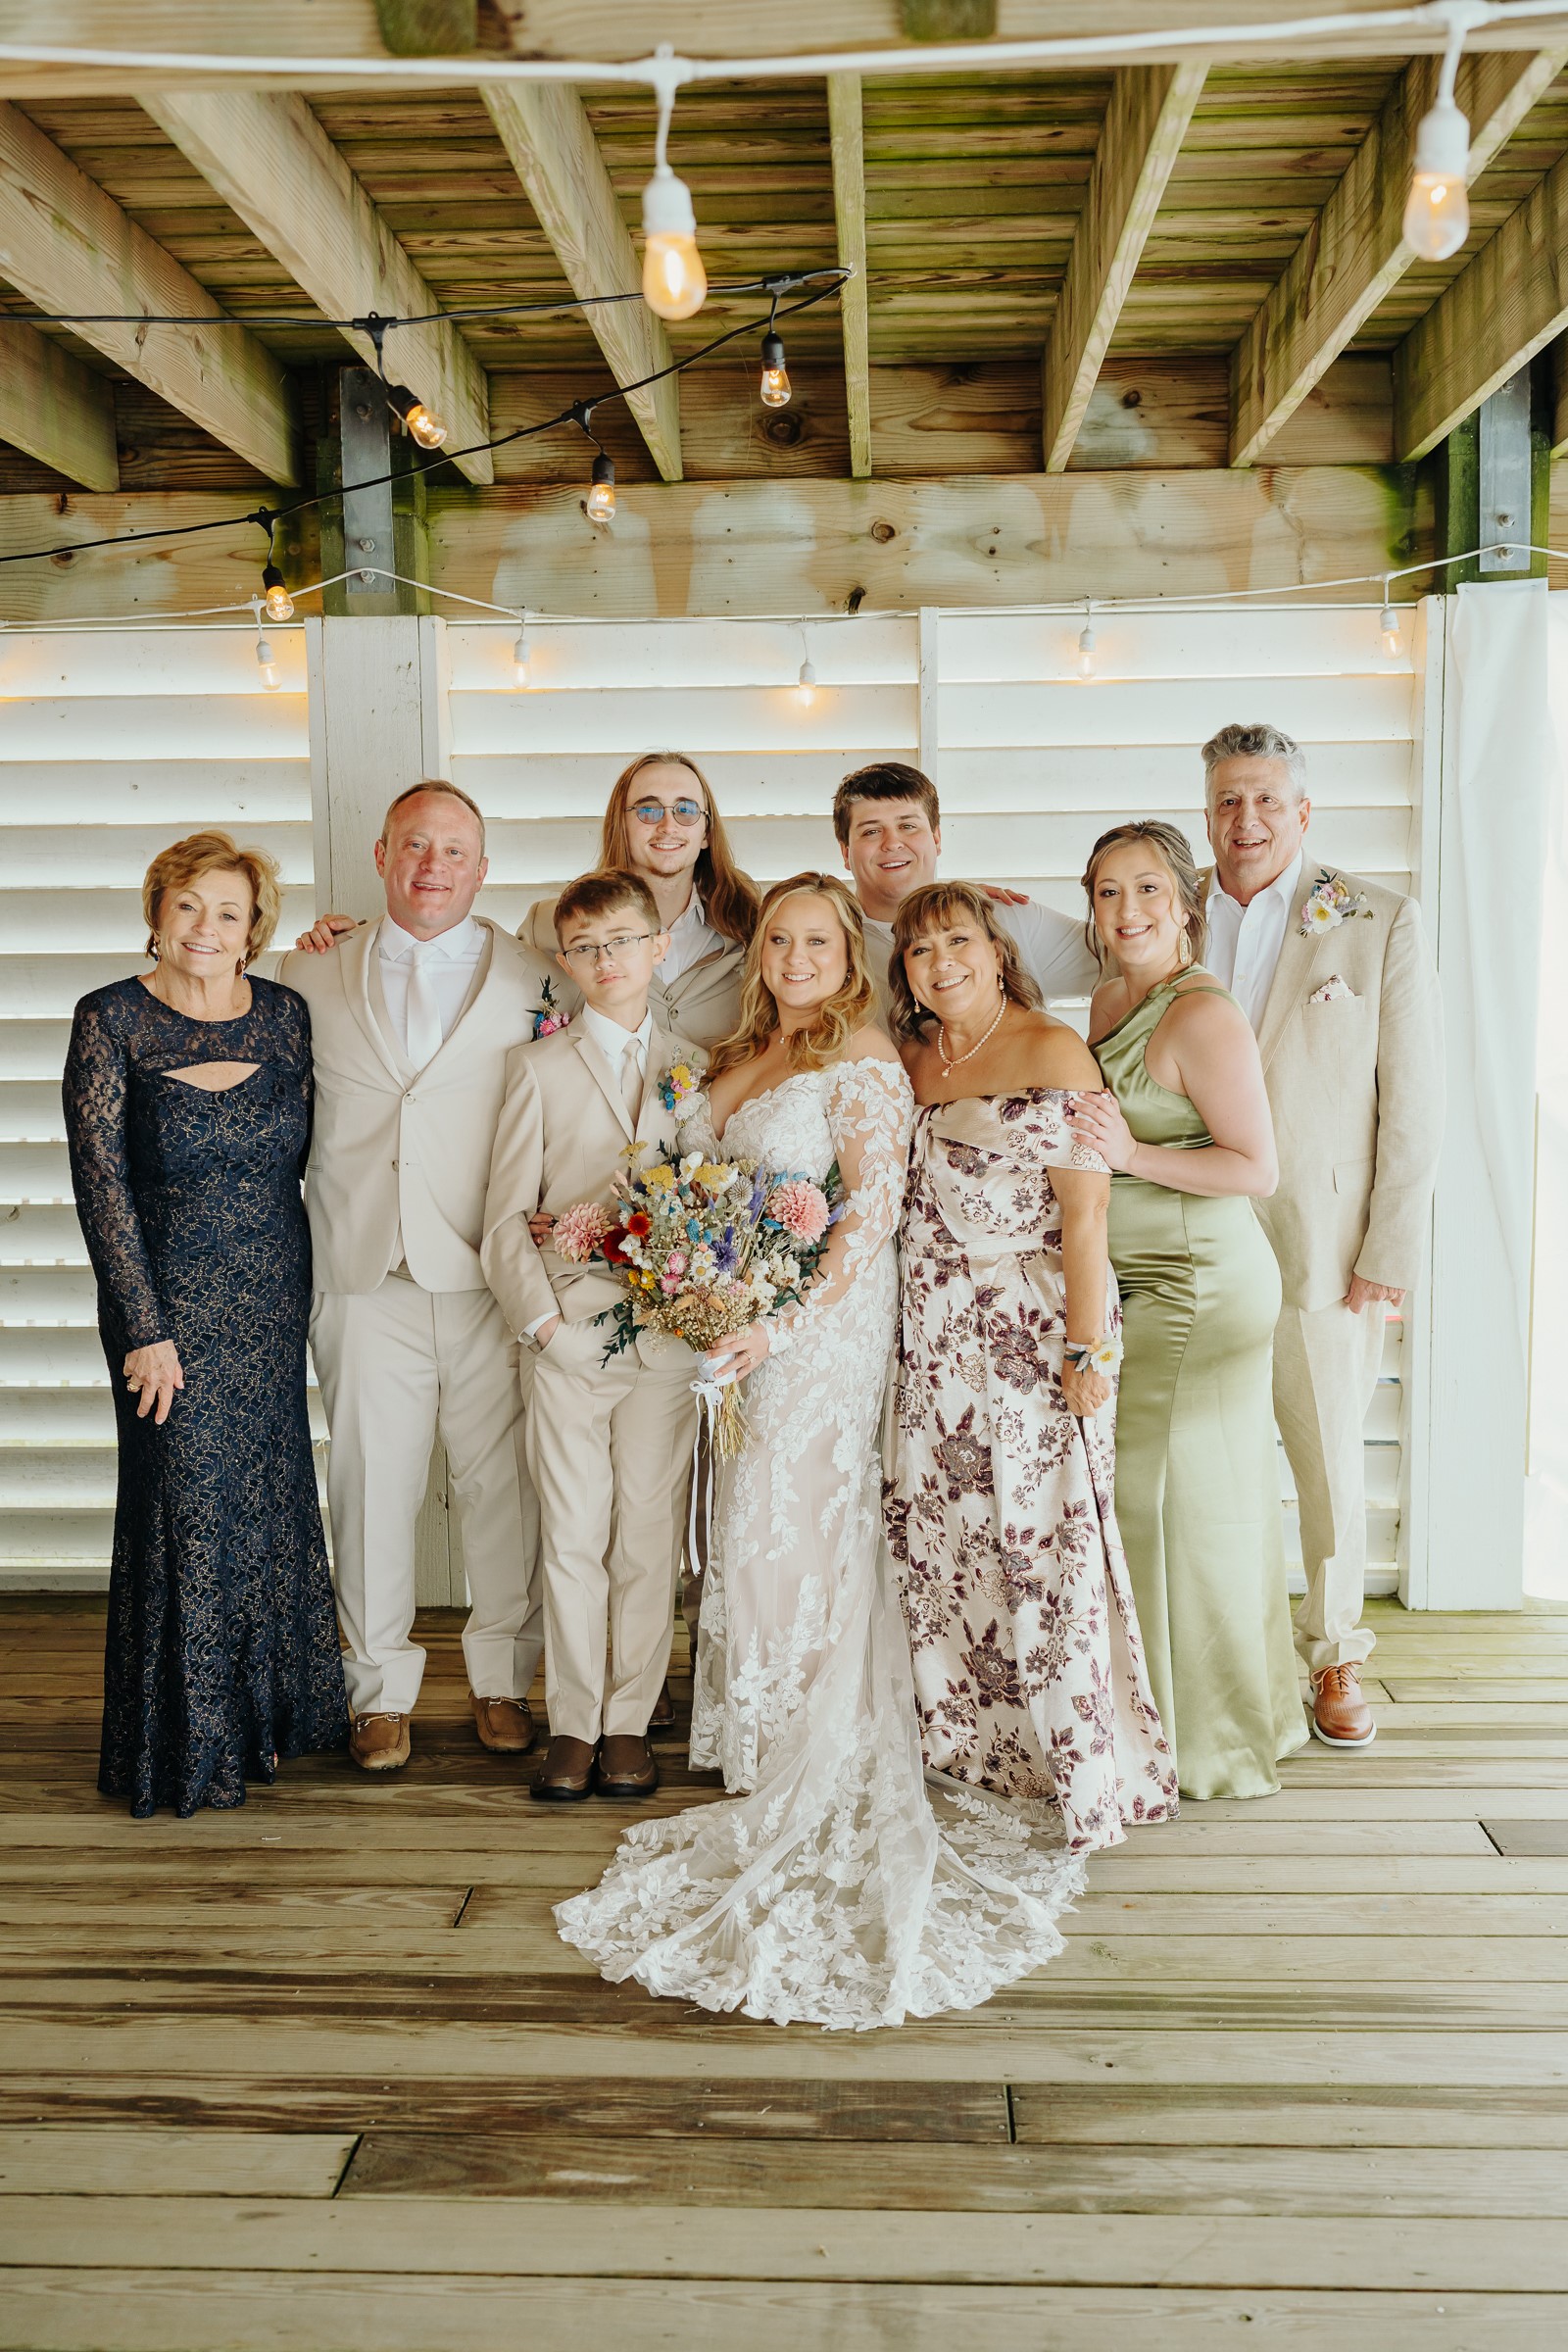 Williams-Harrington Wedding Family Photo